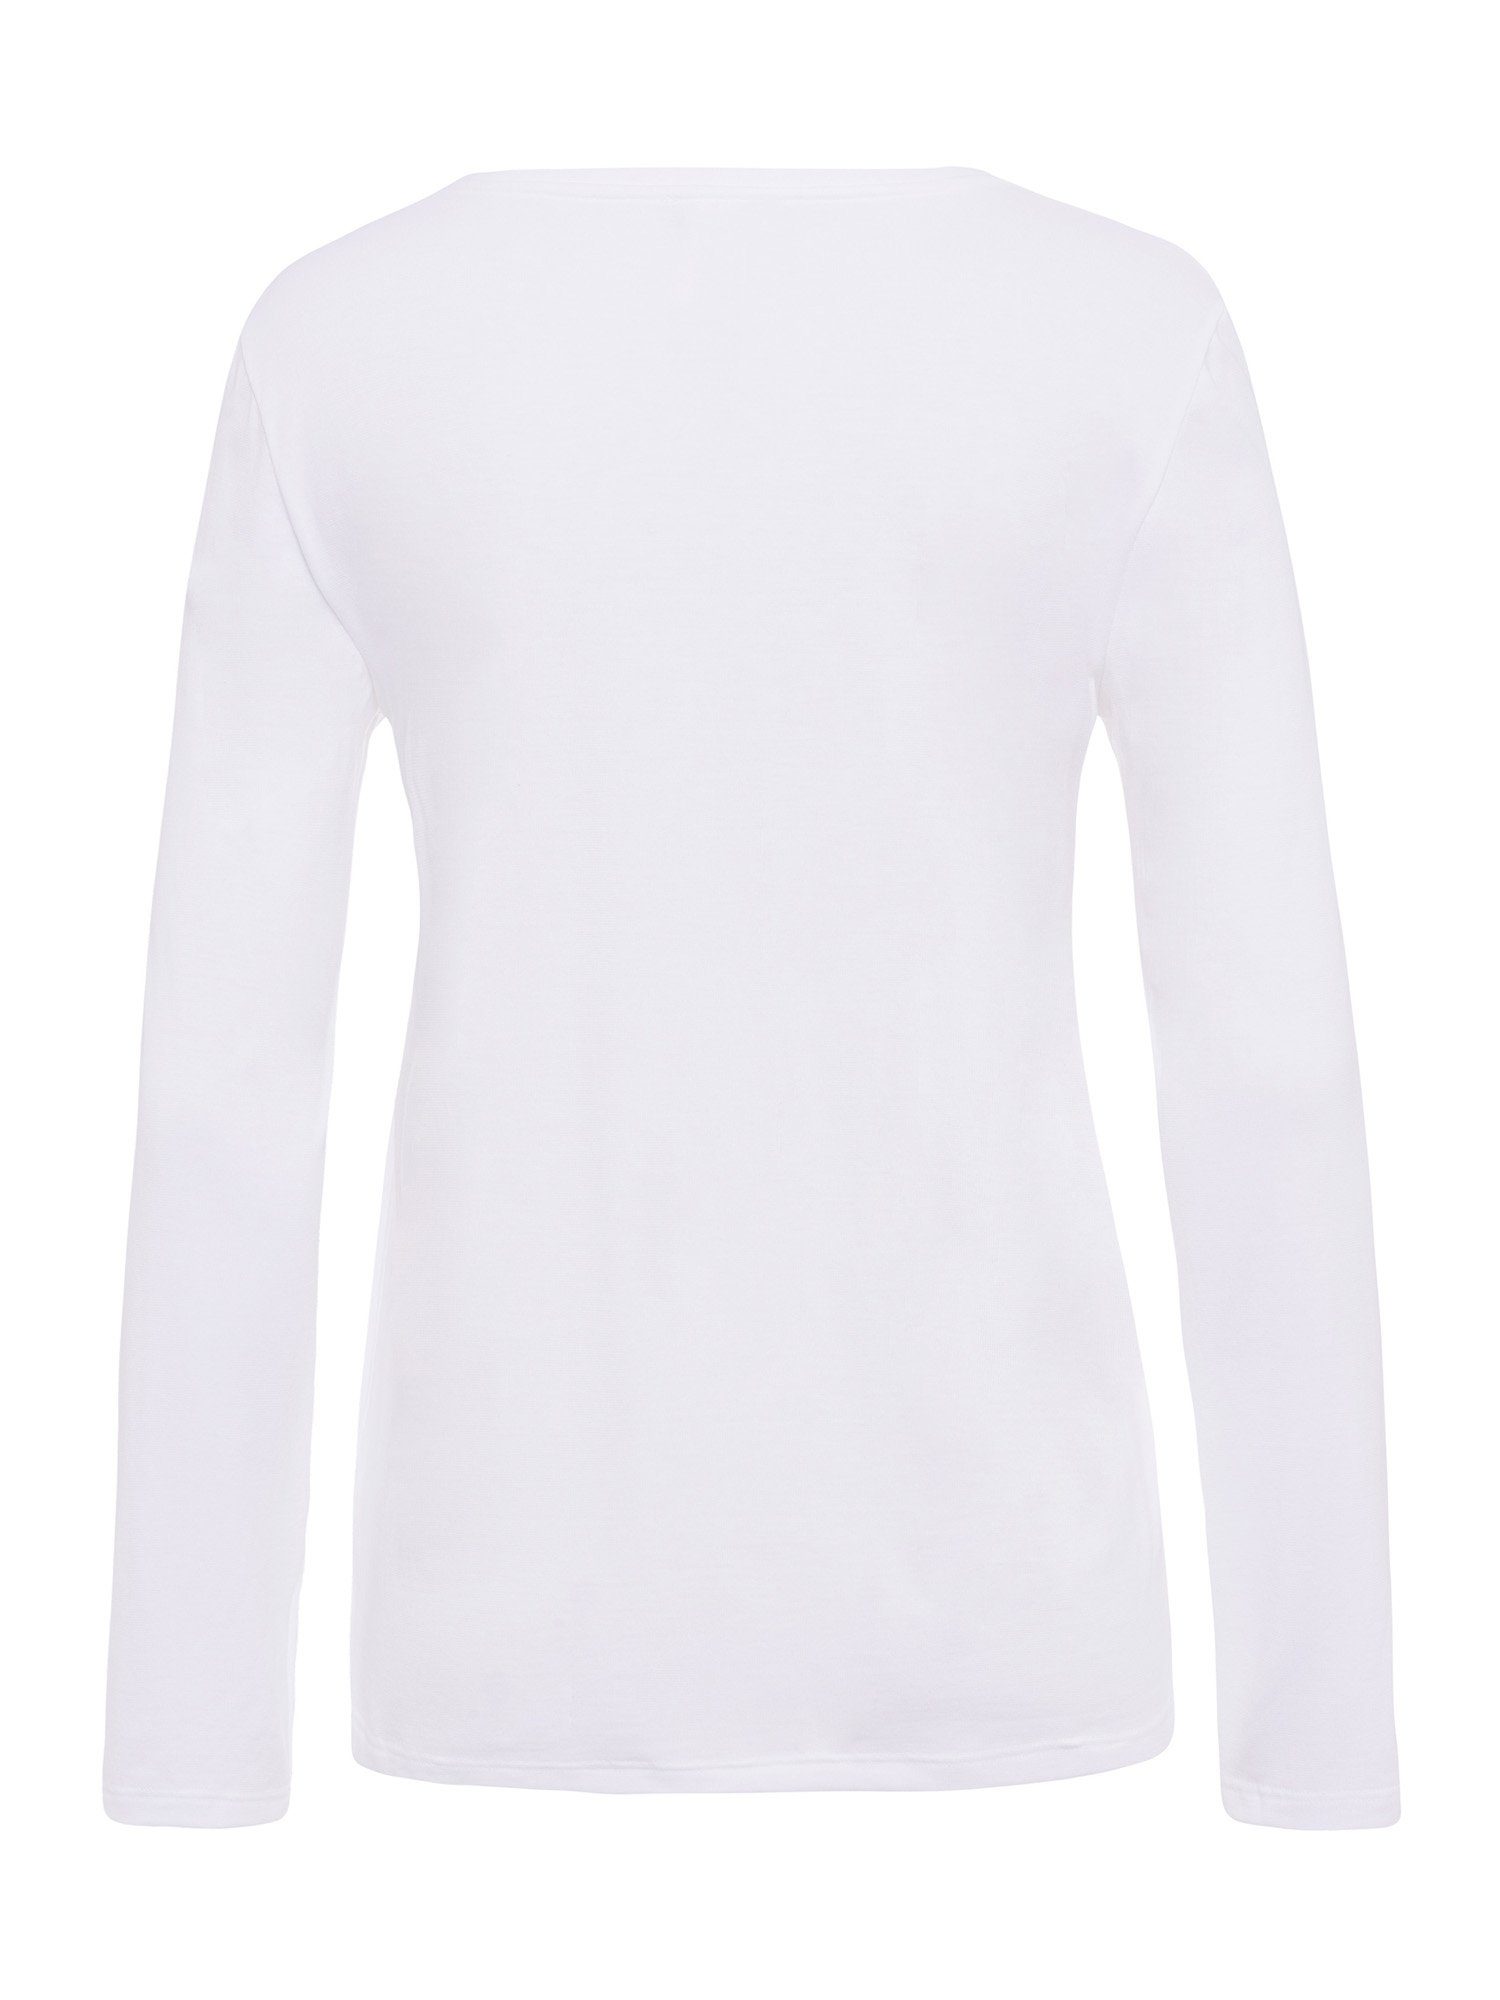 Hanro Pyjamaoberteil Sleep & unterhemd shirt white Lounge langarm